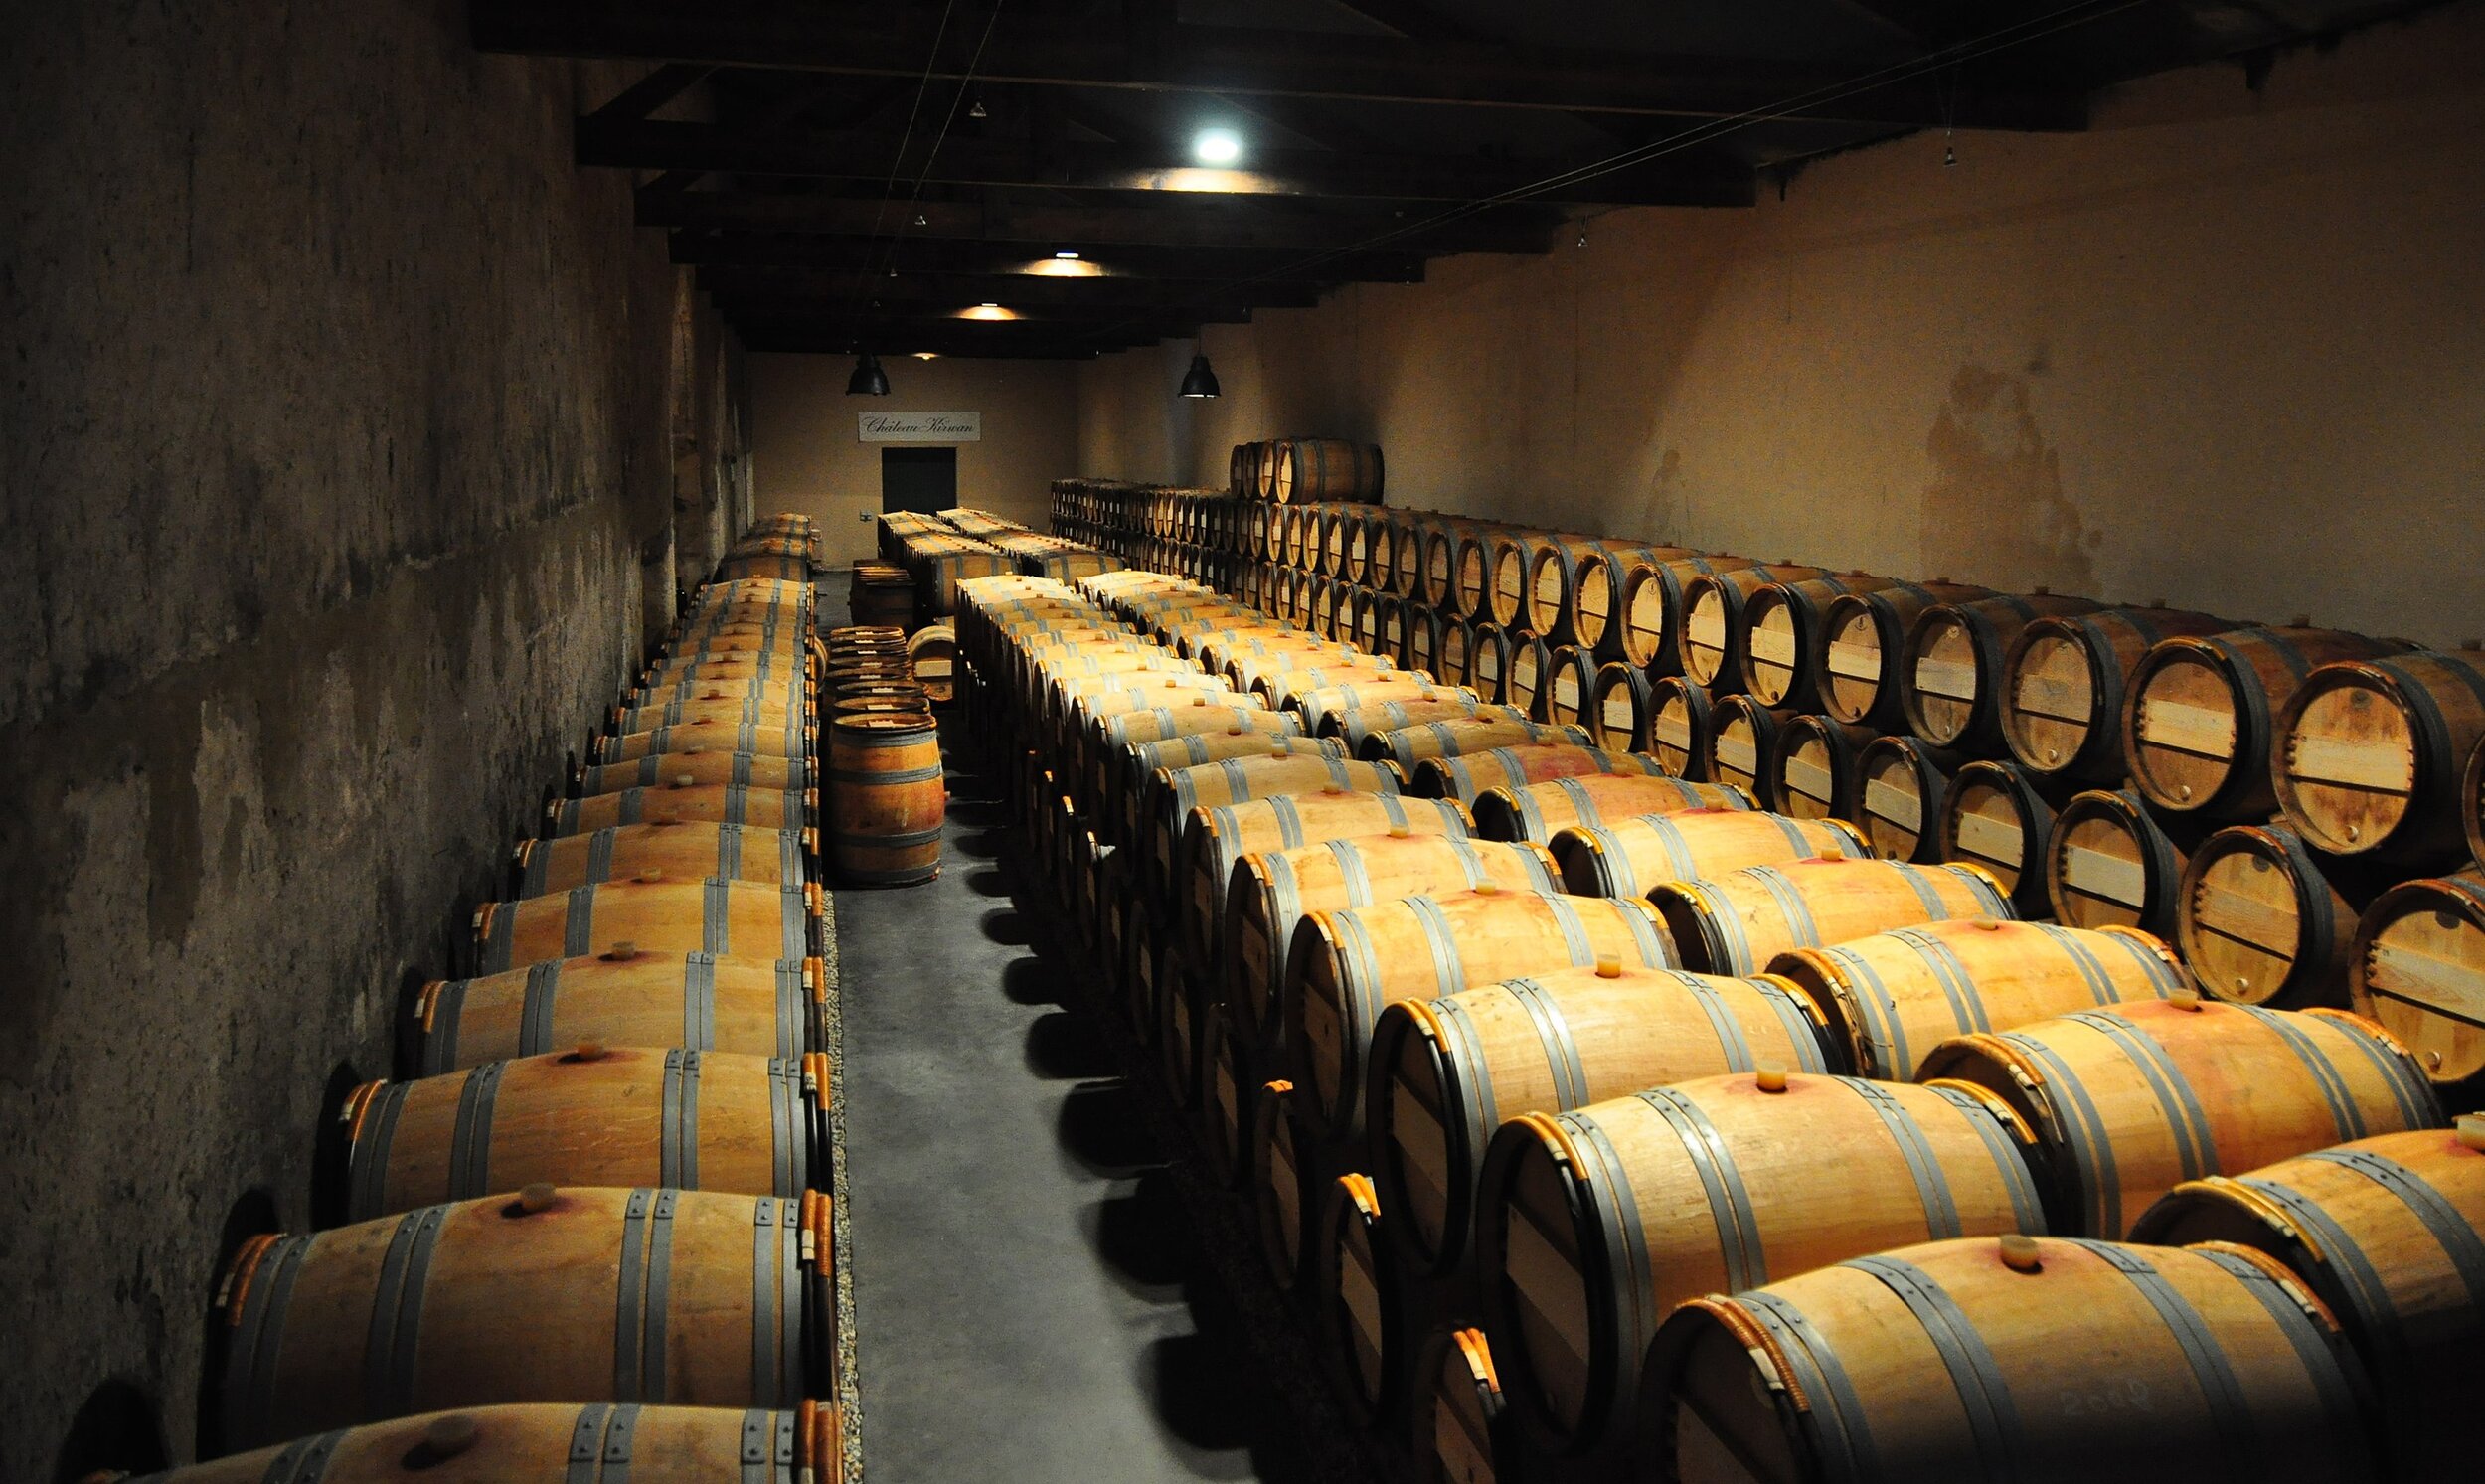 2880px-Wine_Cellar_at_Chateau_Kirwan.jpg